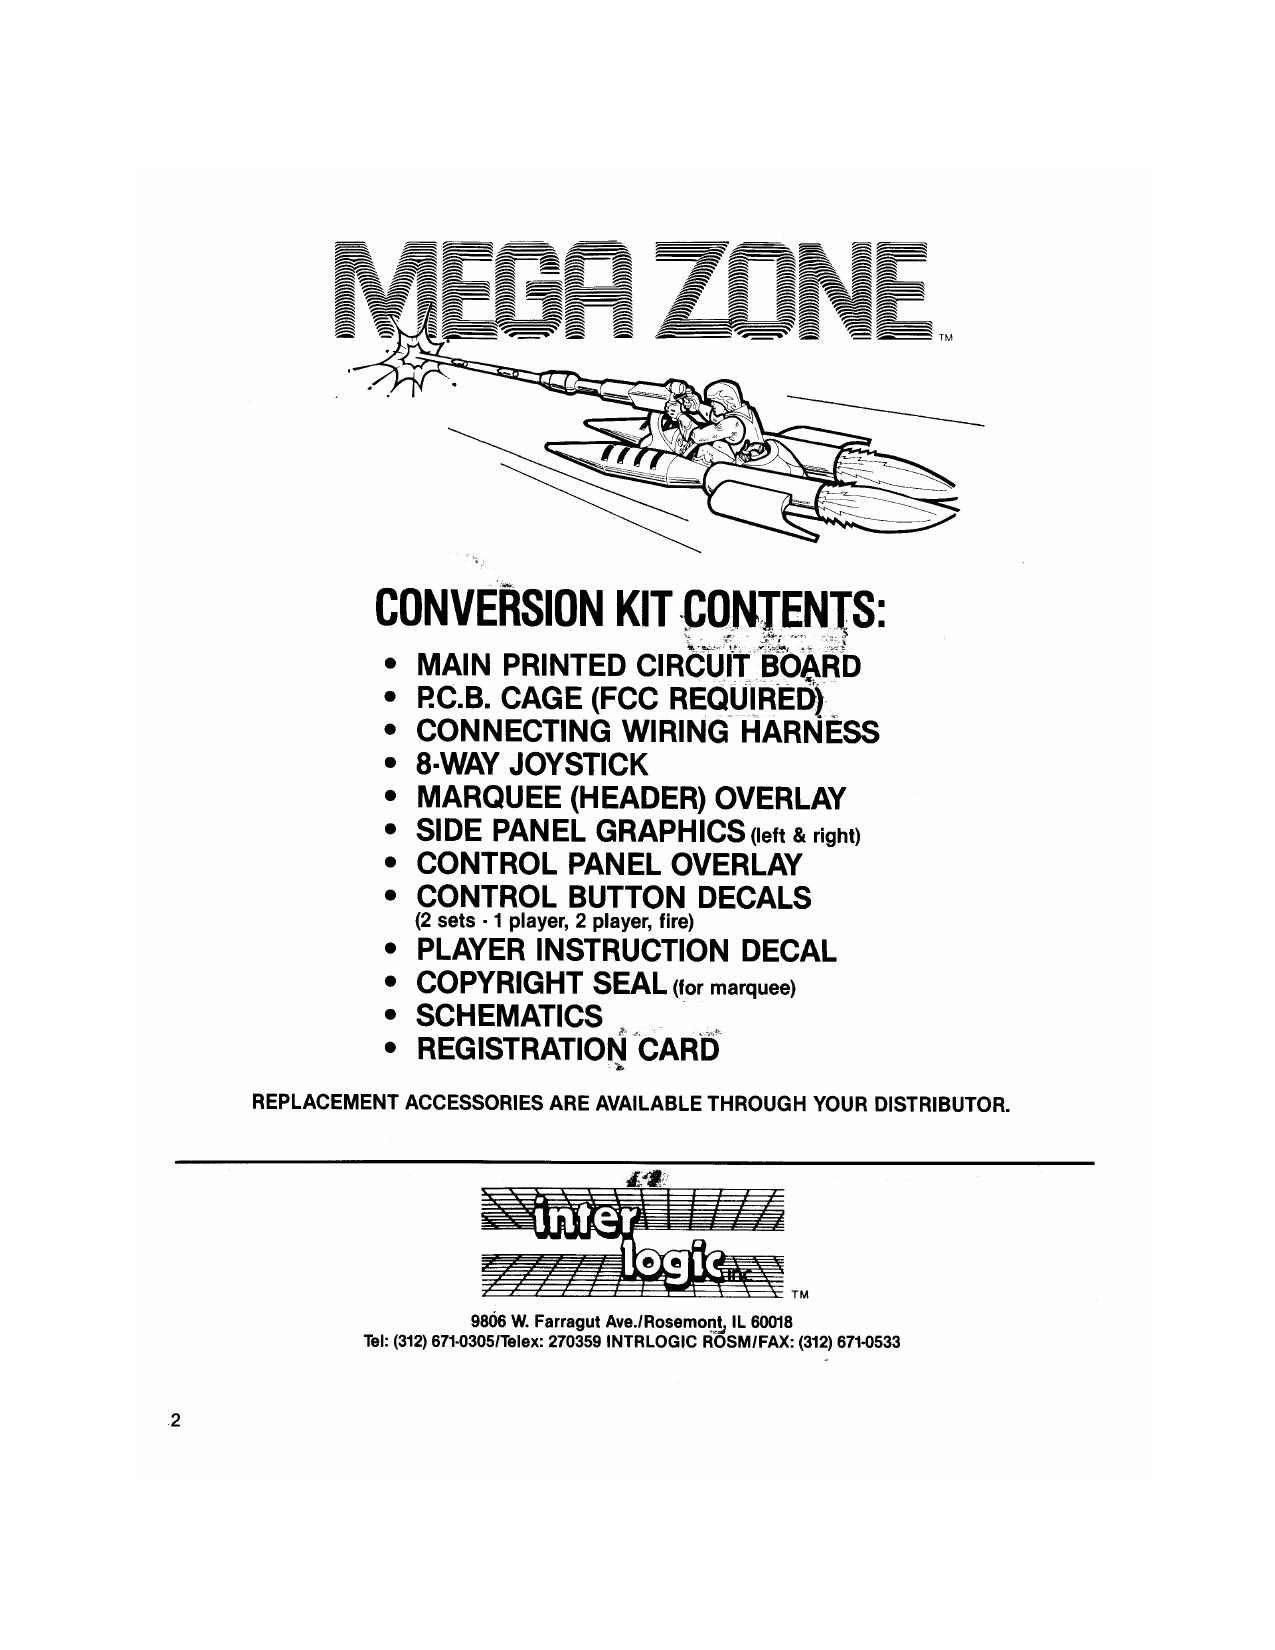 MegaZone Manual